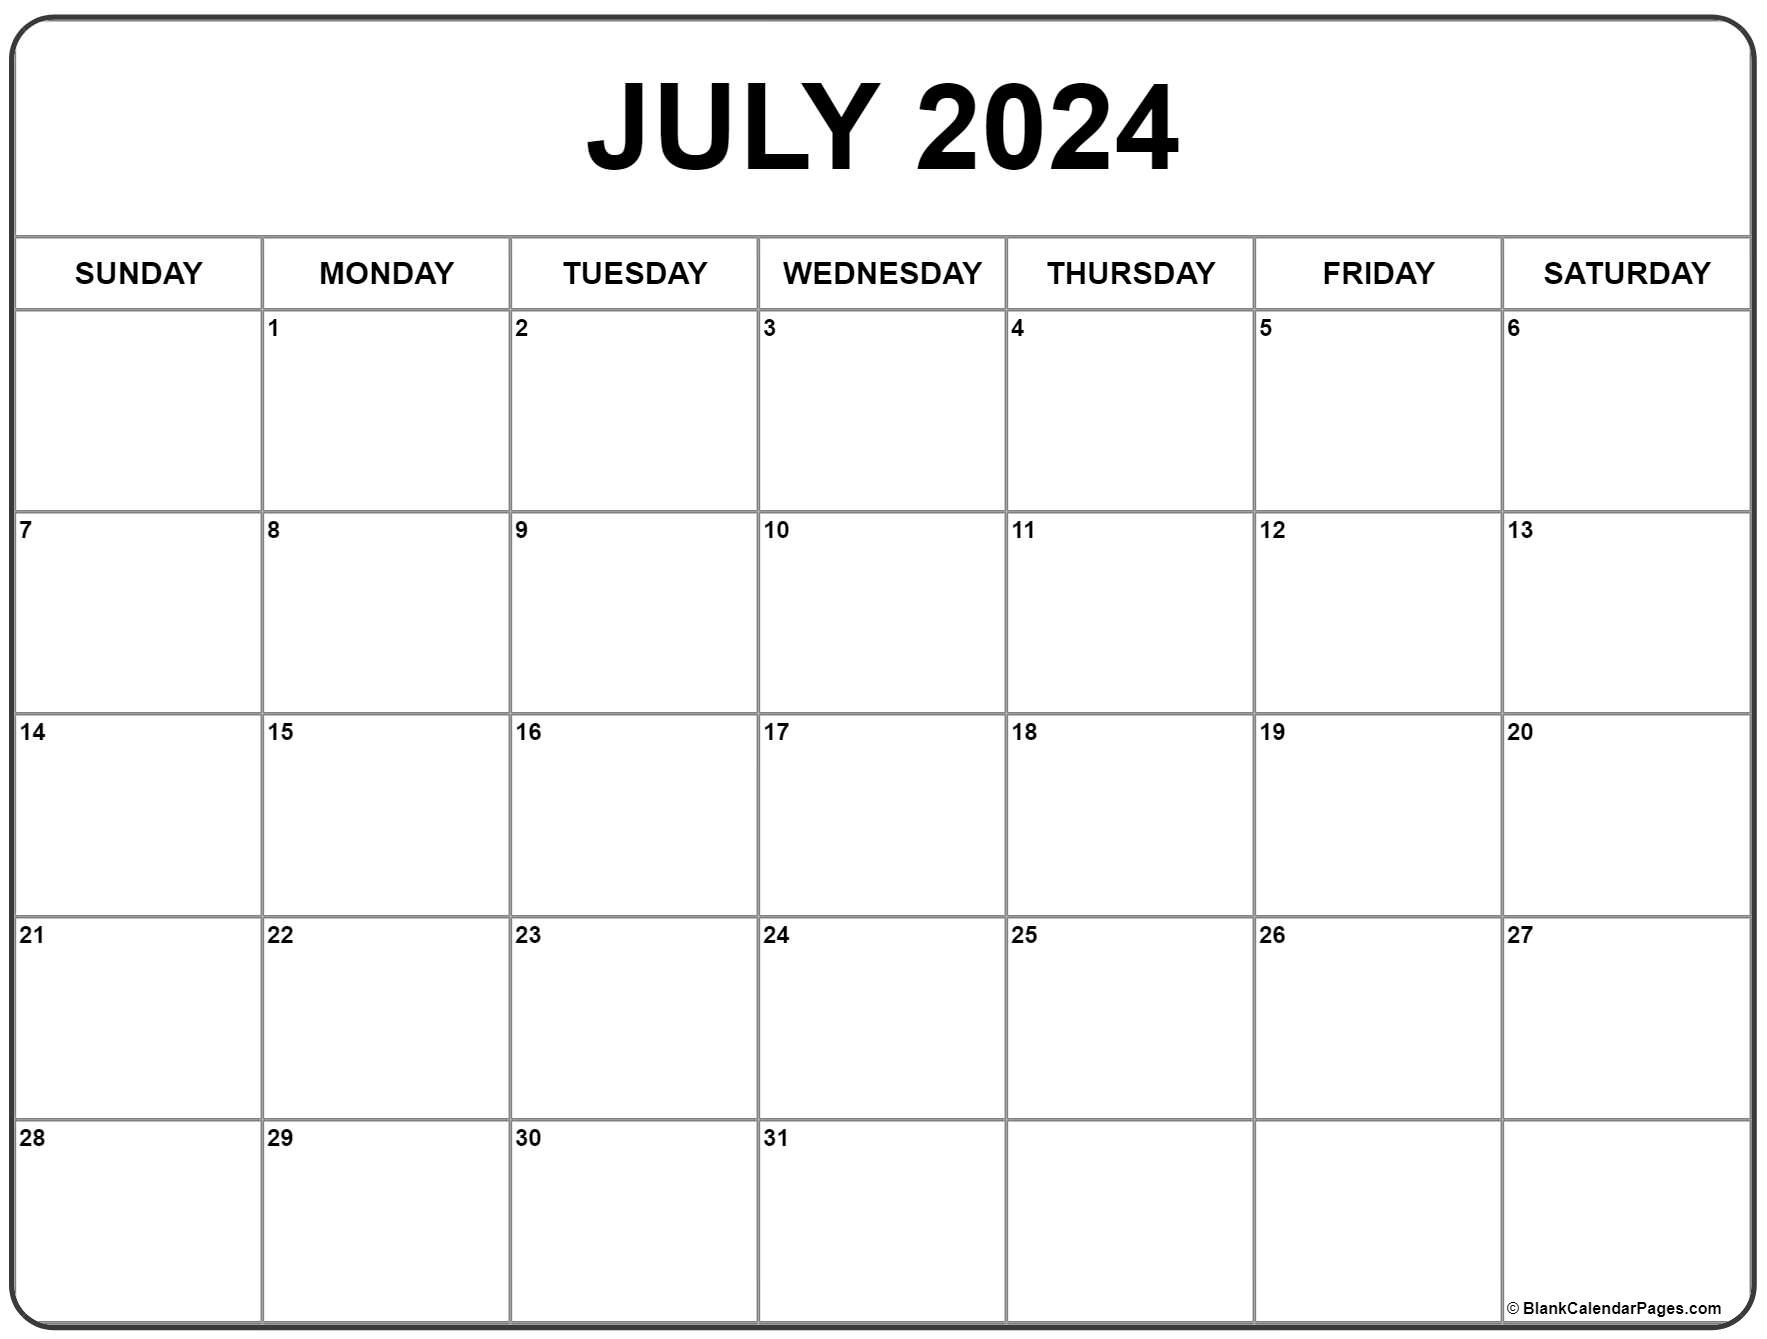 July 2024 Calendar | Free Printable Calendar for Printable Calendar 2024 July